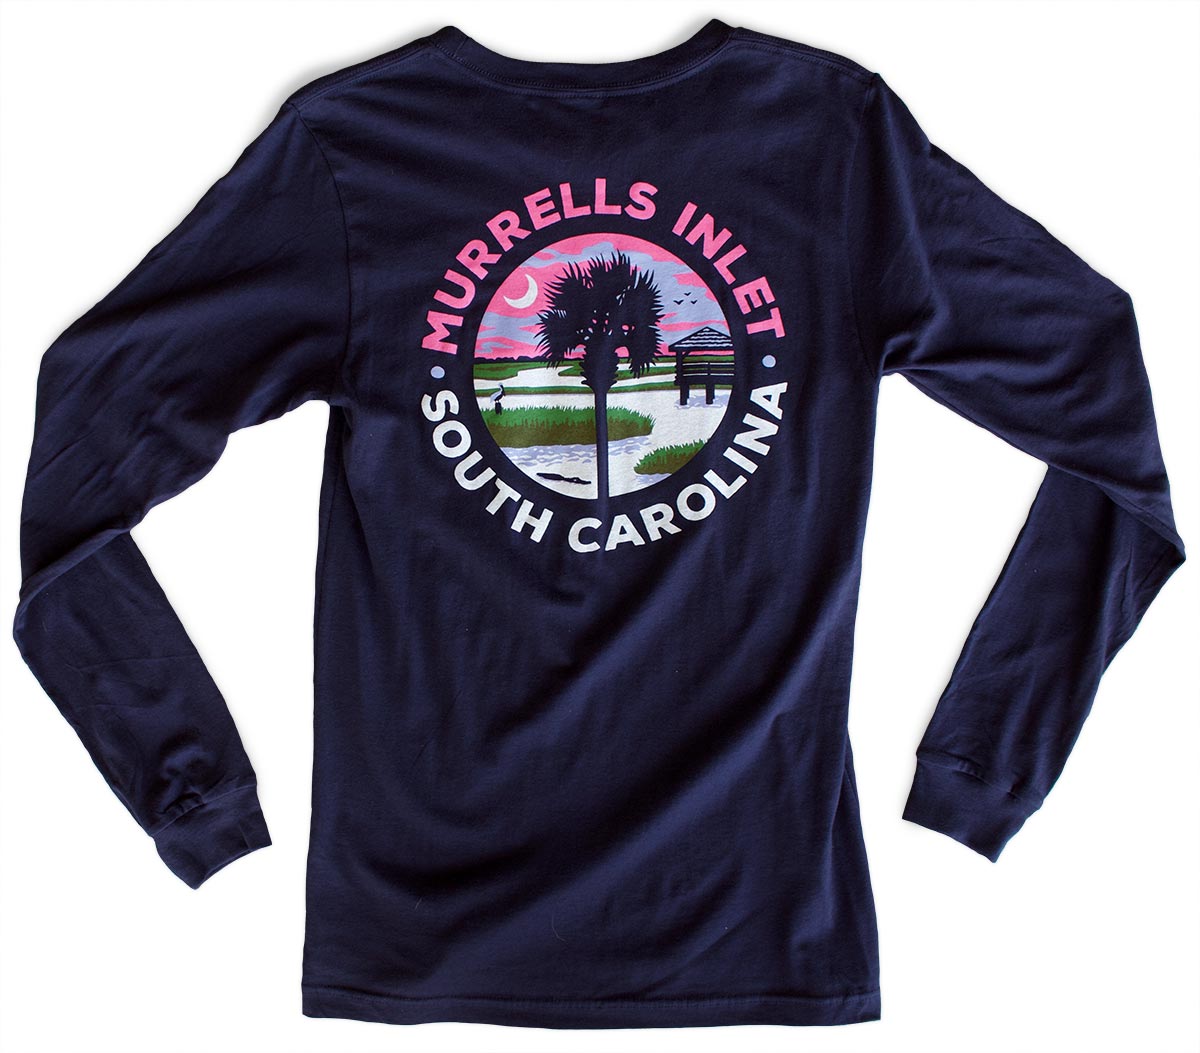 Murrells Inlet (Circle Marsh) Long-Sleeved Unisex T-Shirt